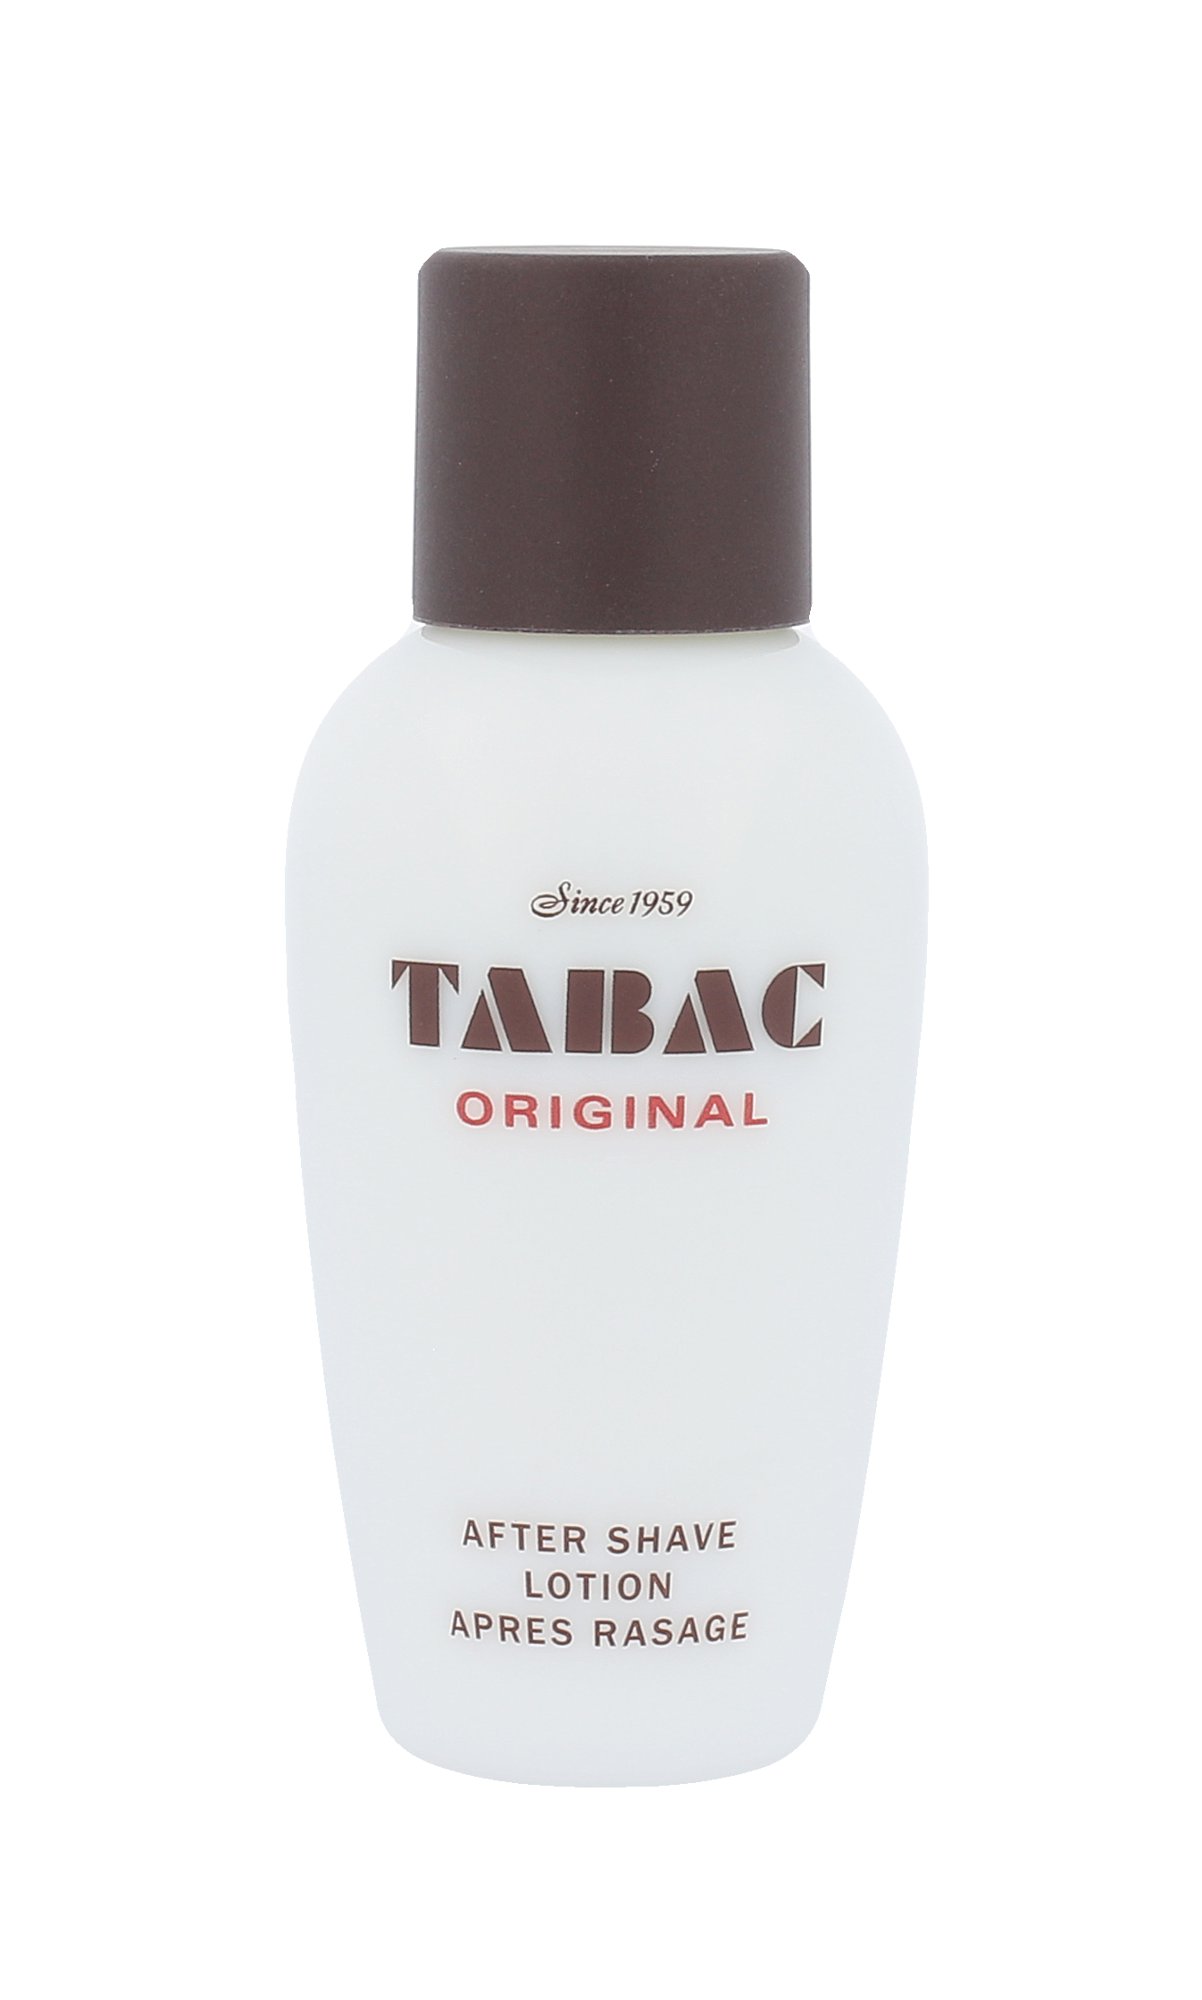 TABAC Original, after shave 100ml